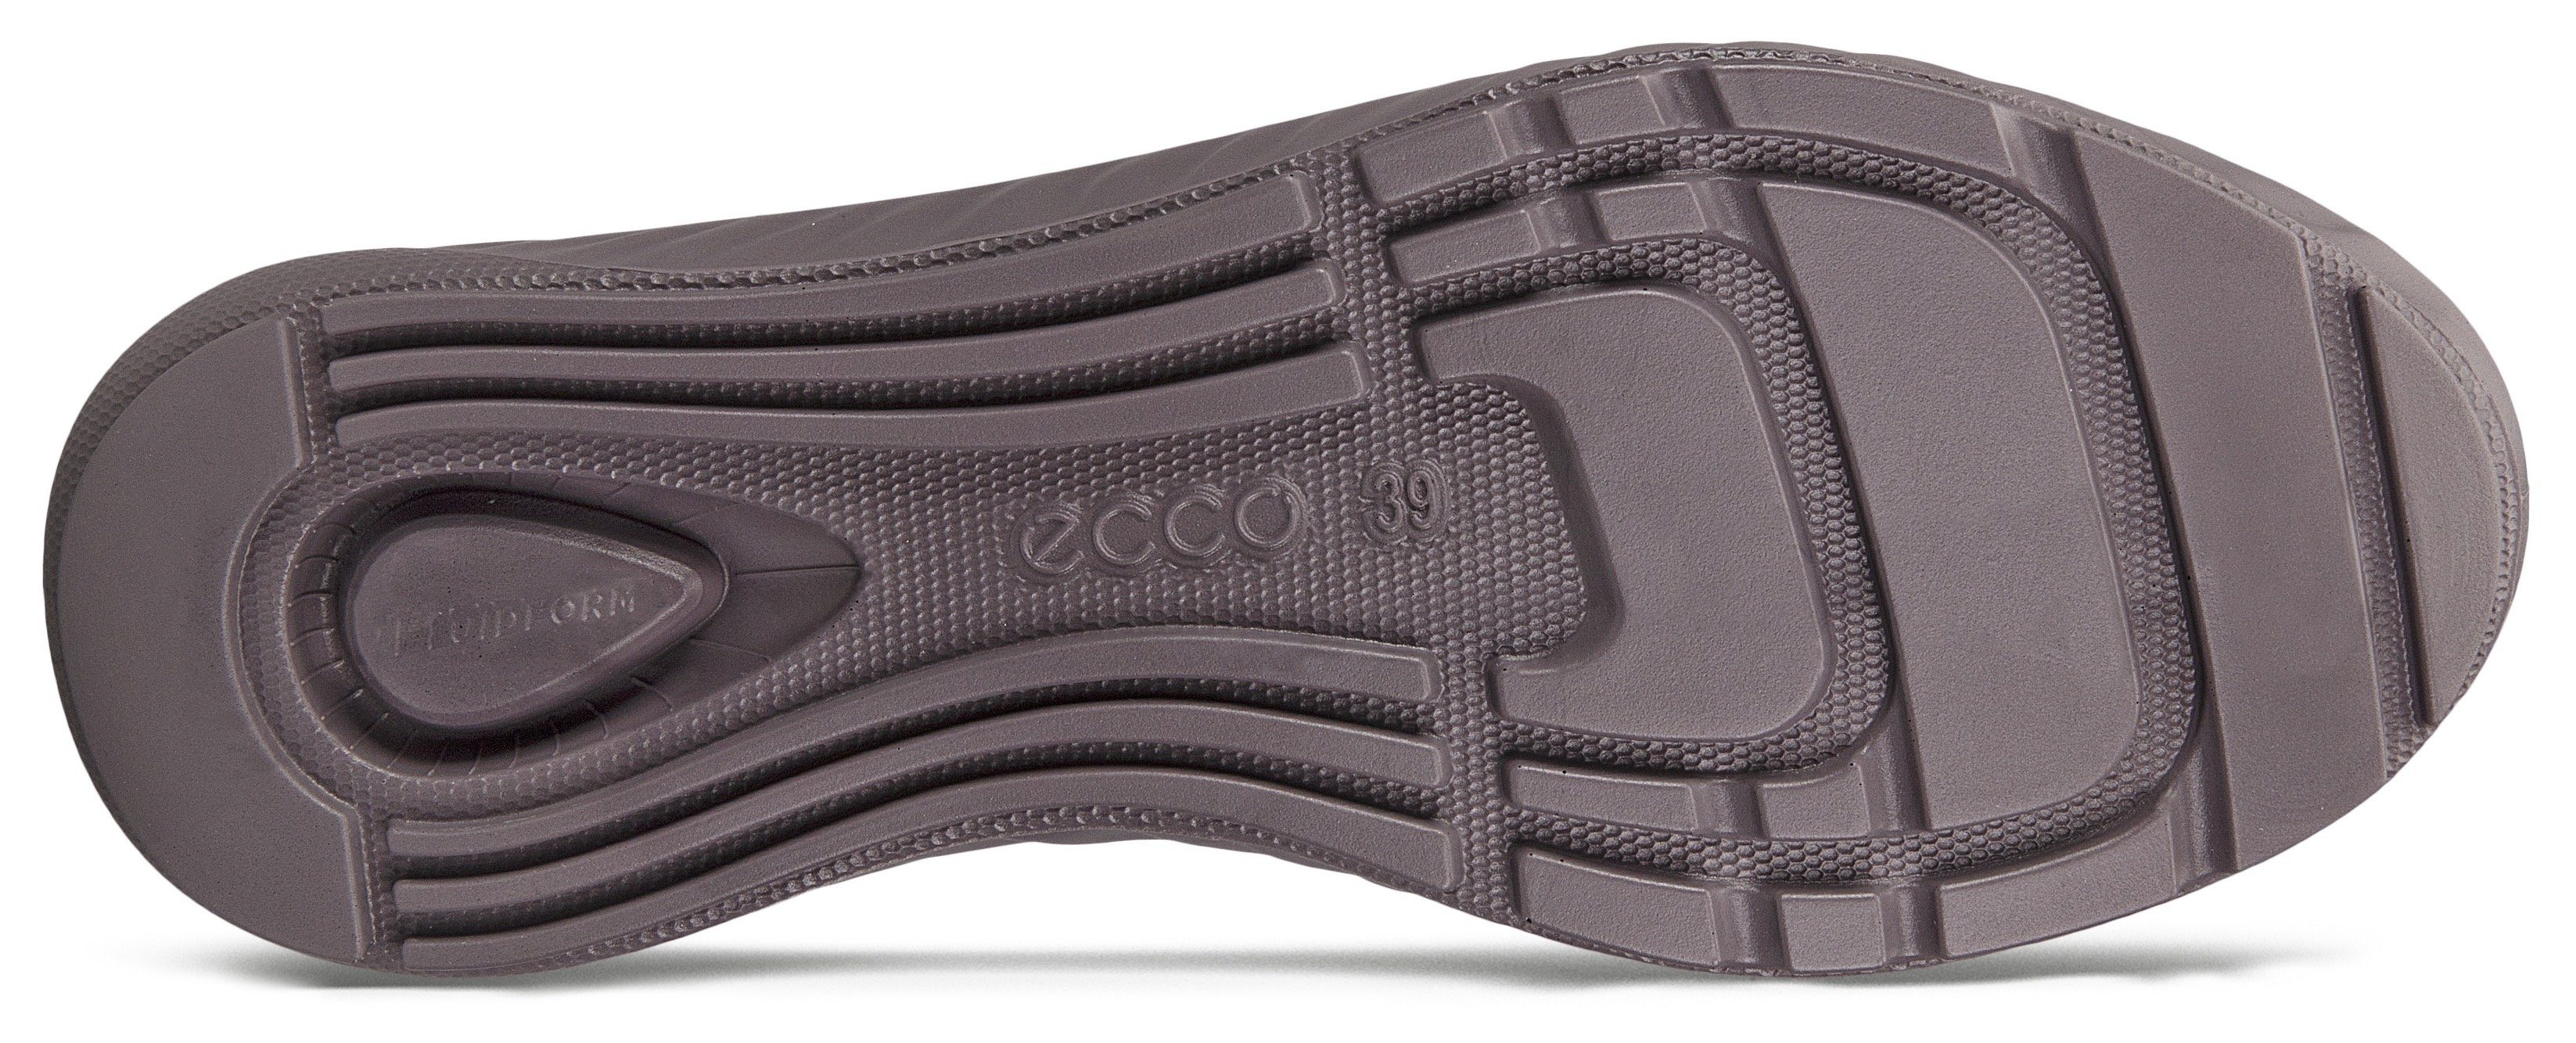 Ecco ATH-1FW Sneaker mit Fußbett herausnehmbarem